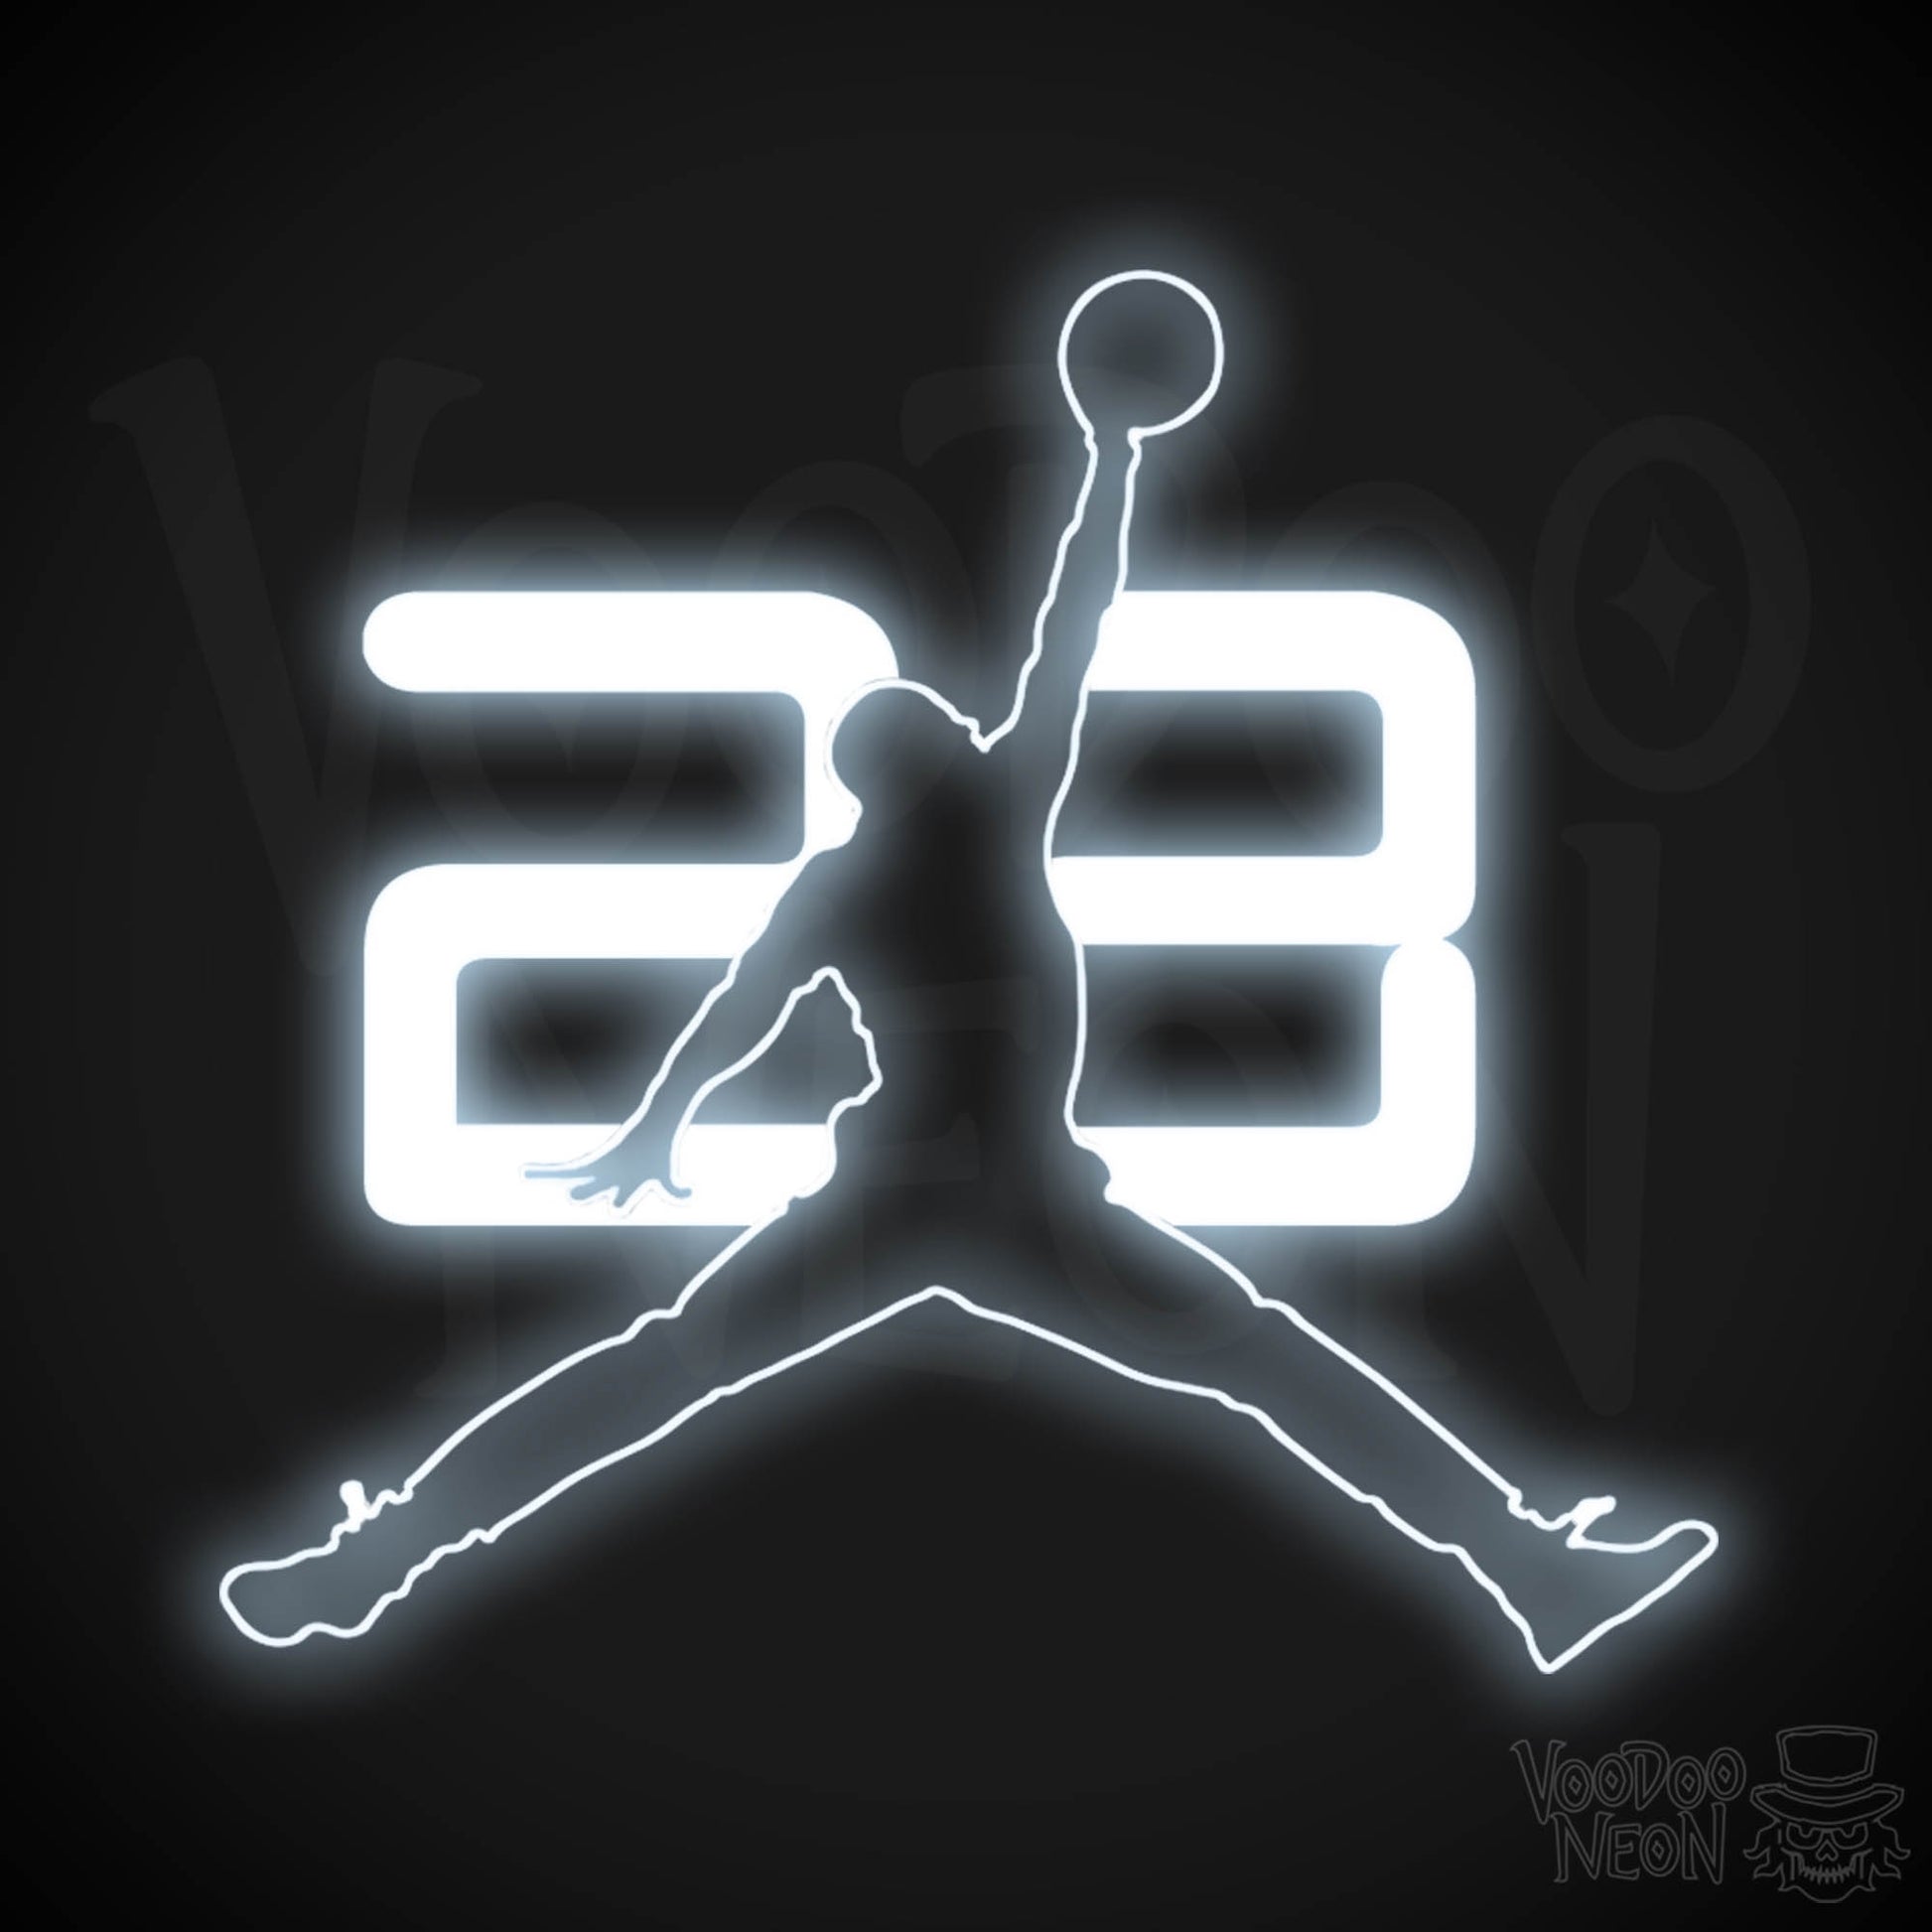 Neon Jordan Dunk - Michael Jordan Neon Wall Art - Neon Basketball Dunk Sign - Color Cool White